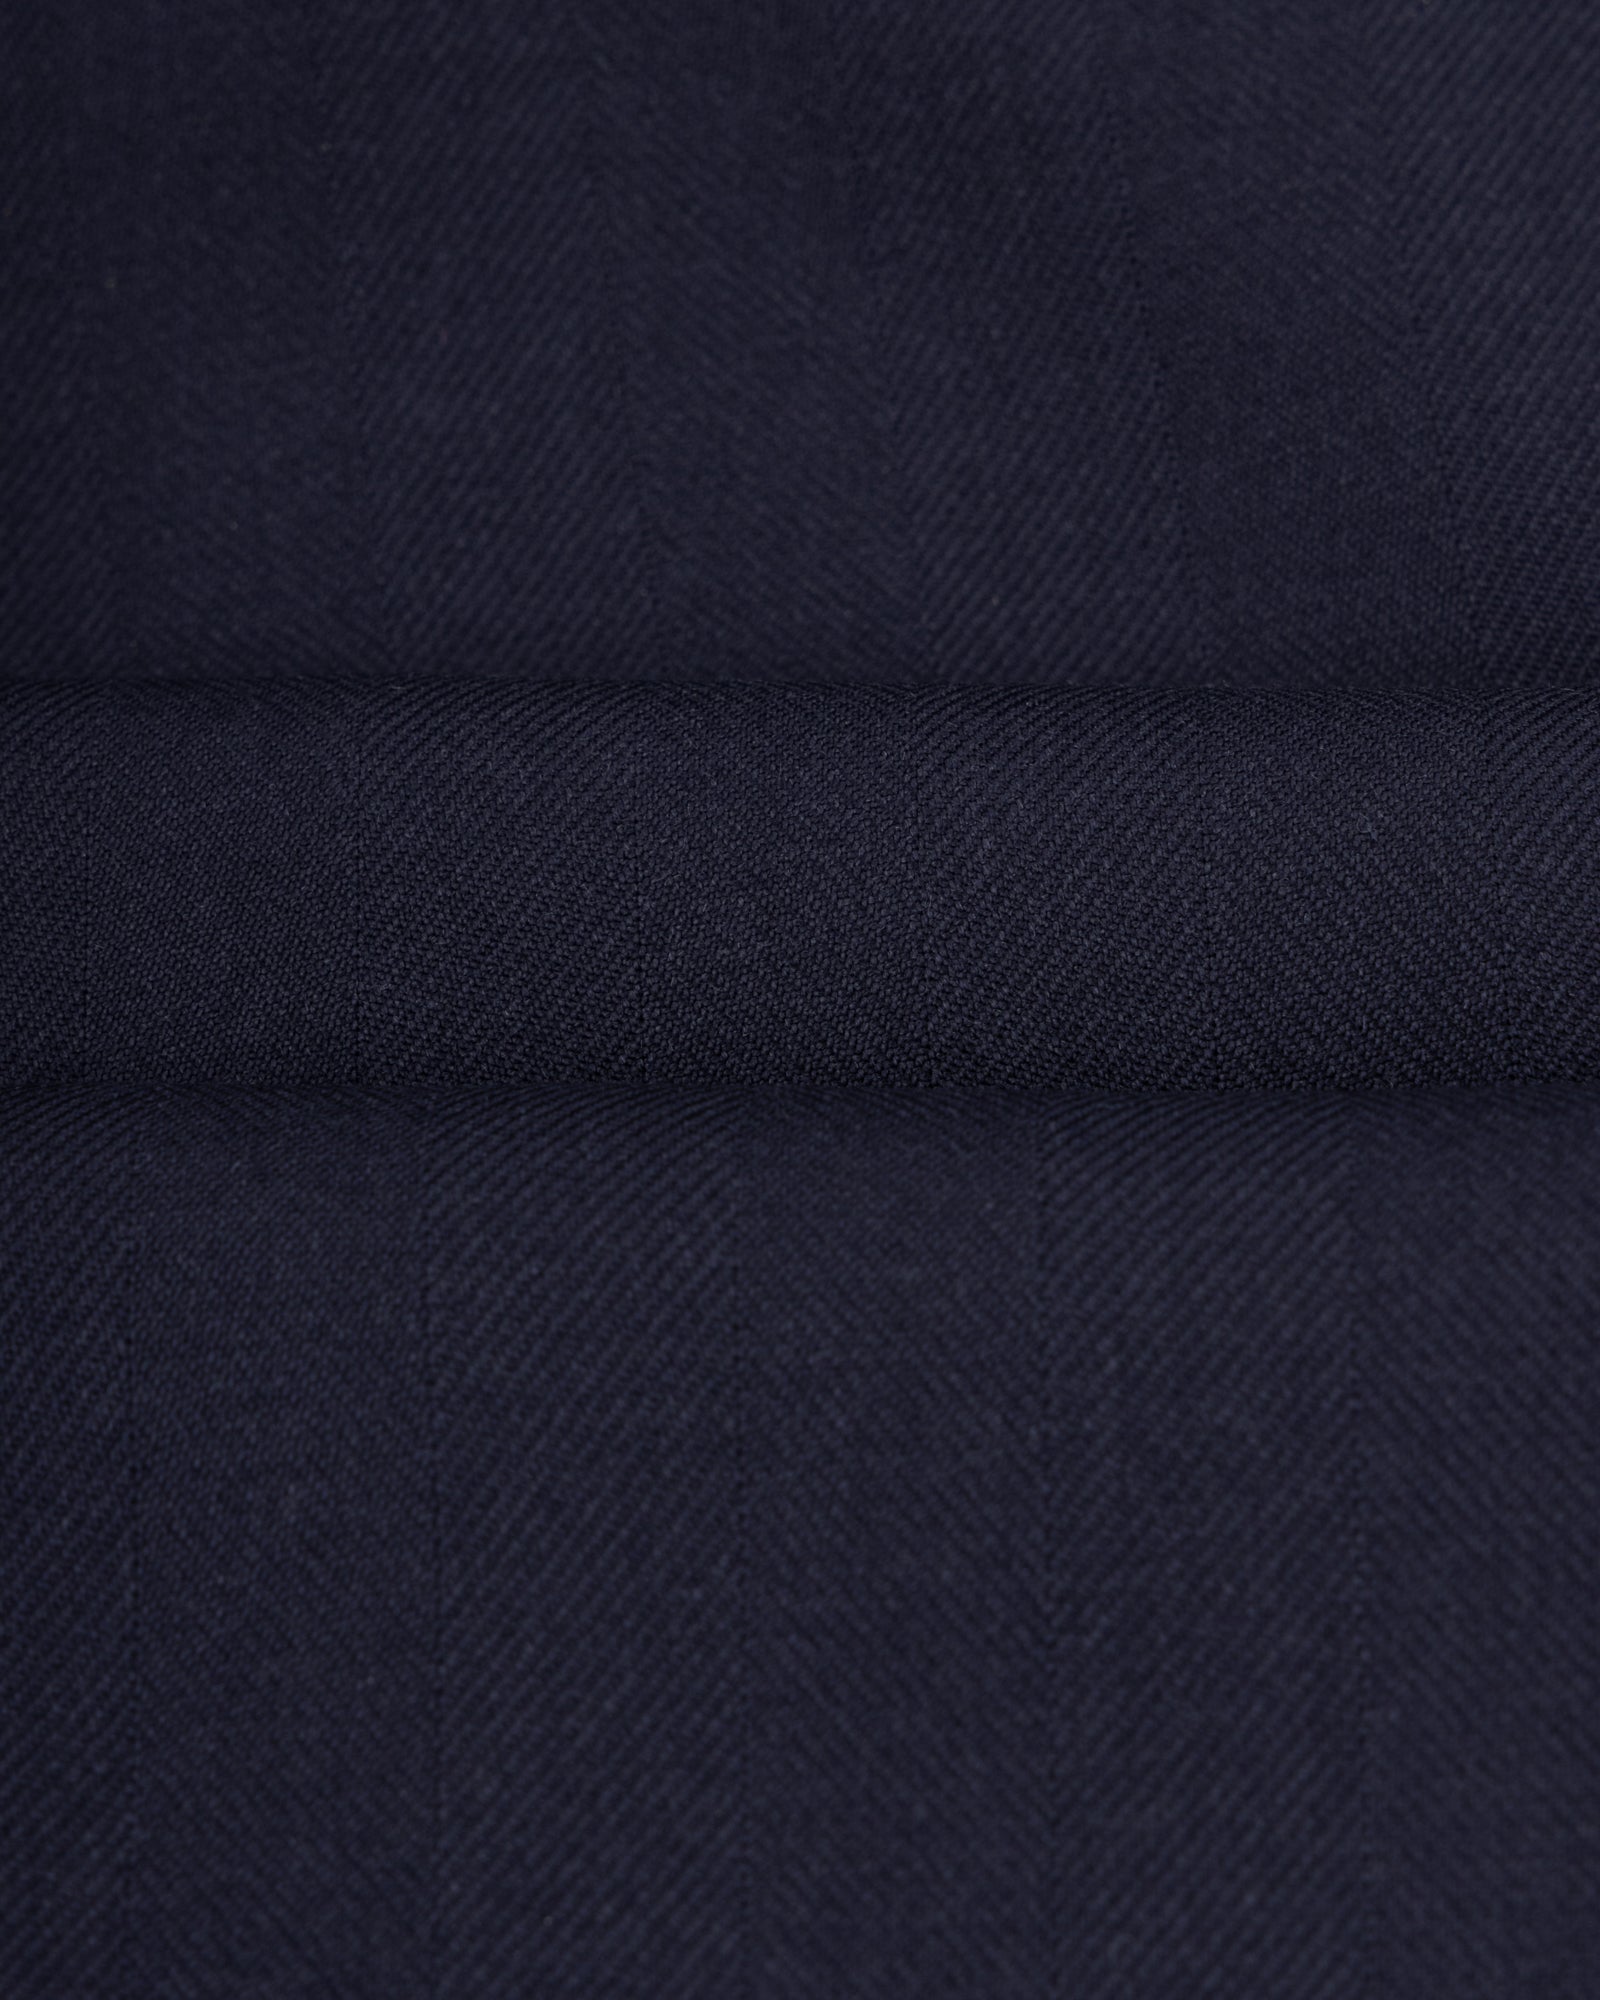 Single Pleat Trouser - Navy Herringbone Wool